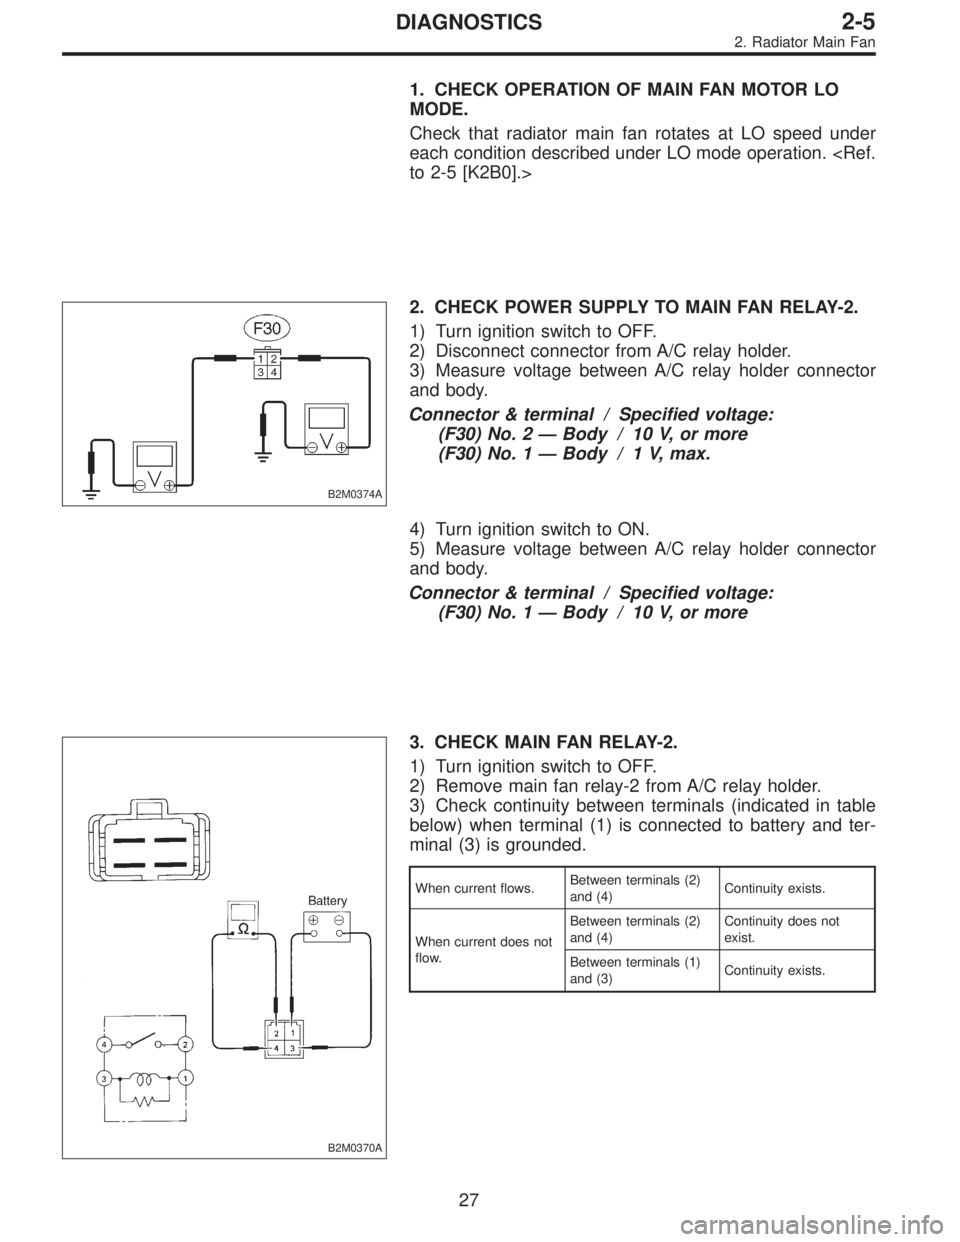 SUBARU LEGACY 1995  Service Repair Manual 1. CHECK OPERATION OF MAIN FAN MOTOR LO
MODE.
Check that radiator main fan rotates at LO speed under
each condition described under LO mode operation. <Ref.
to 2-5 [K2B0].>
B2M0374A
2. CHECK POWER SUP